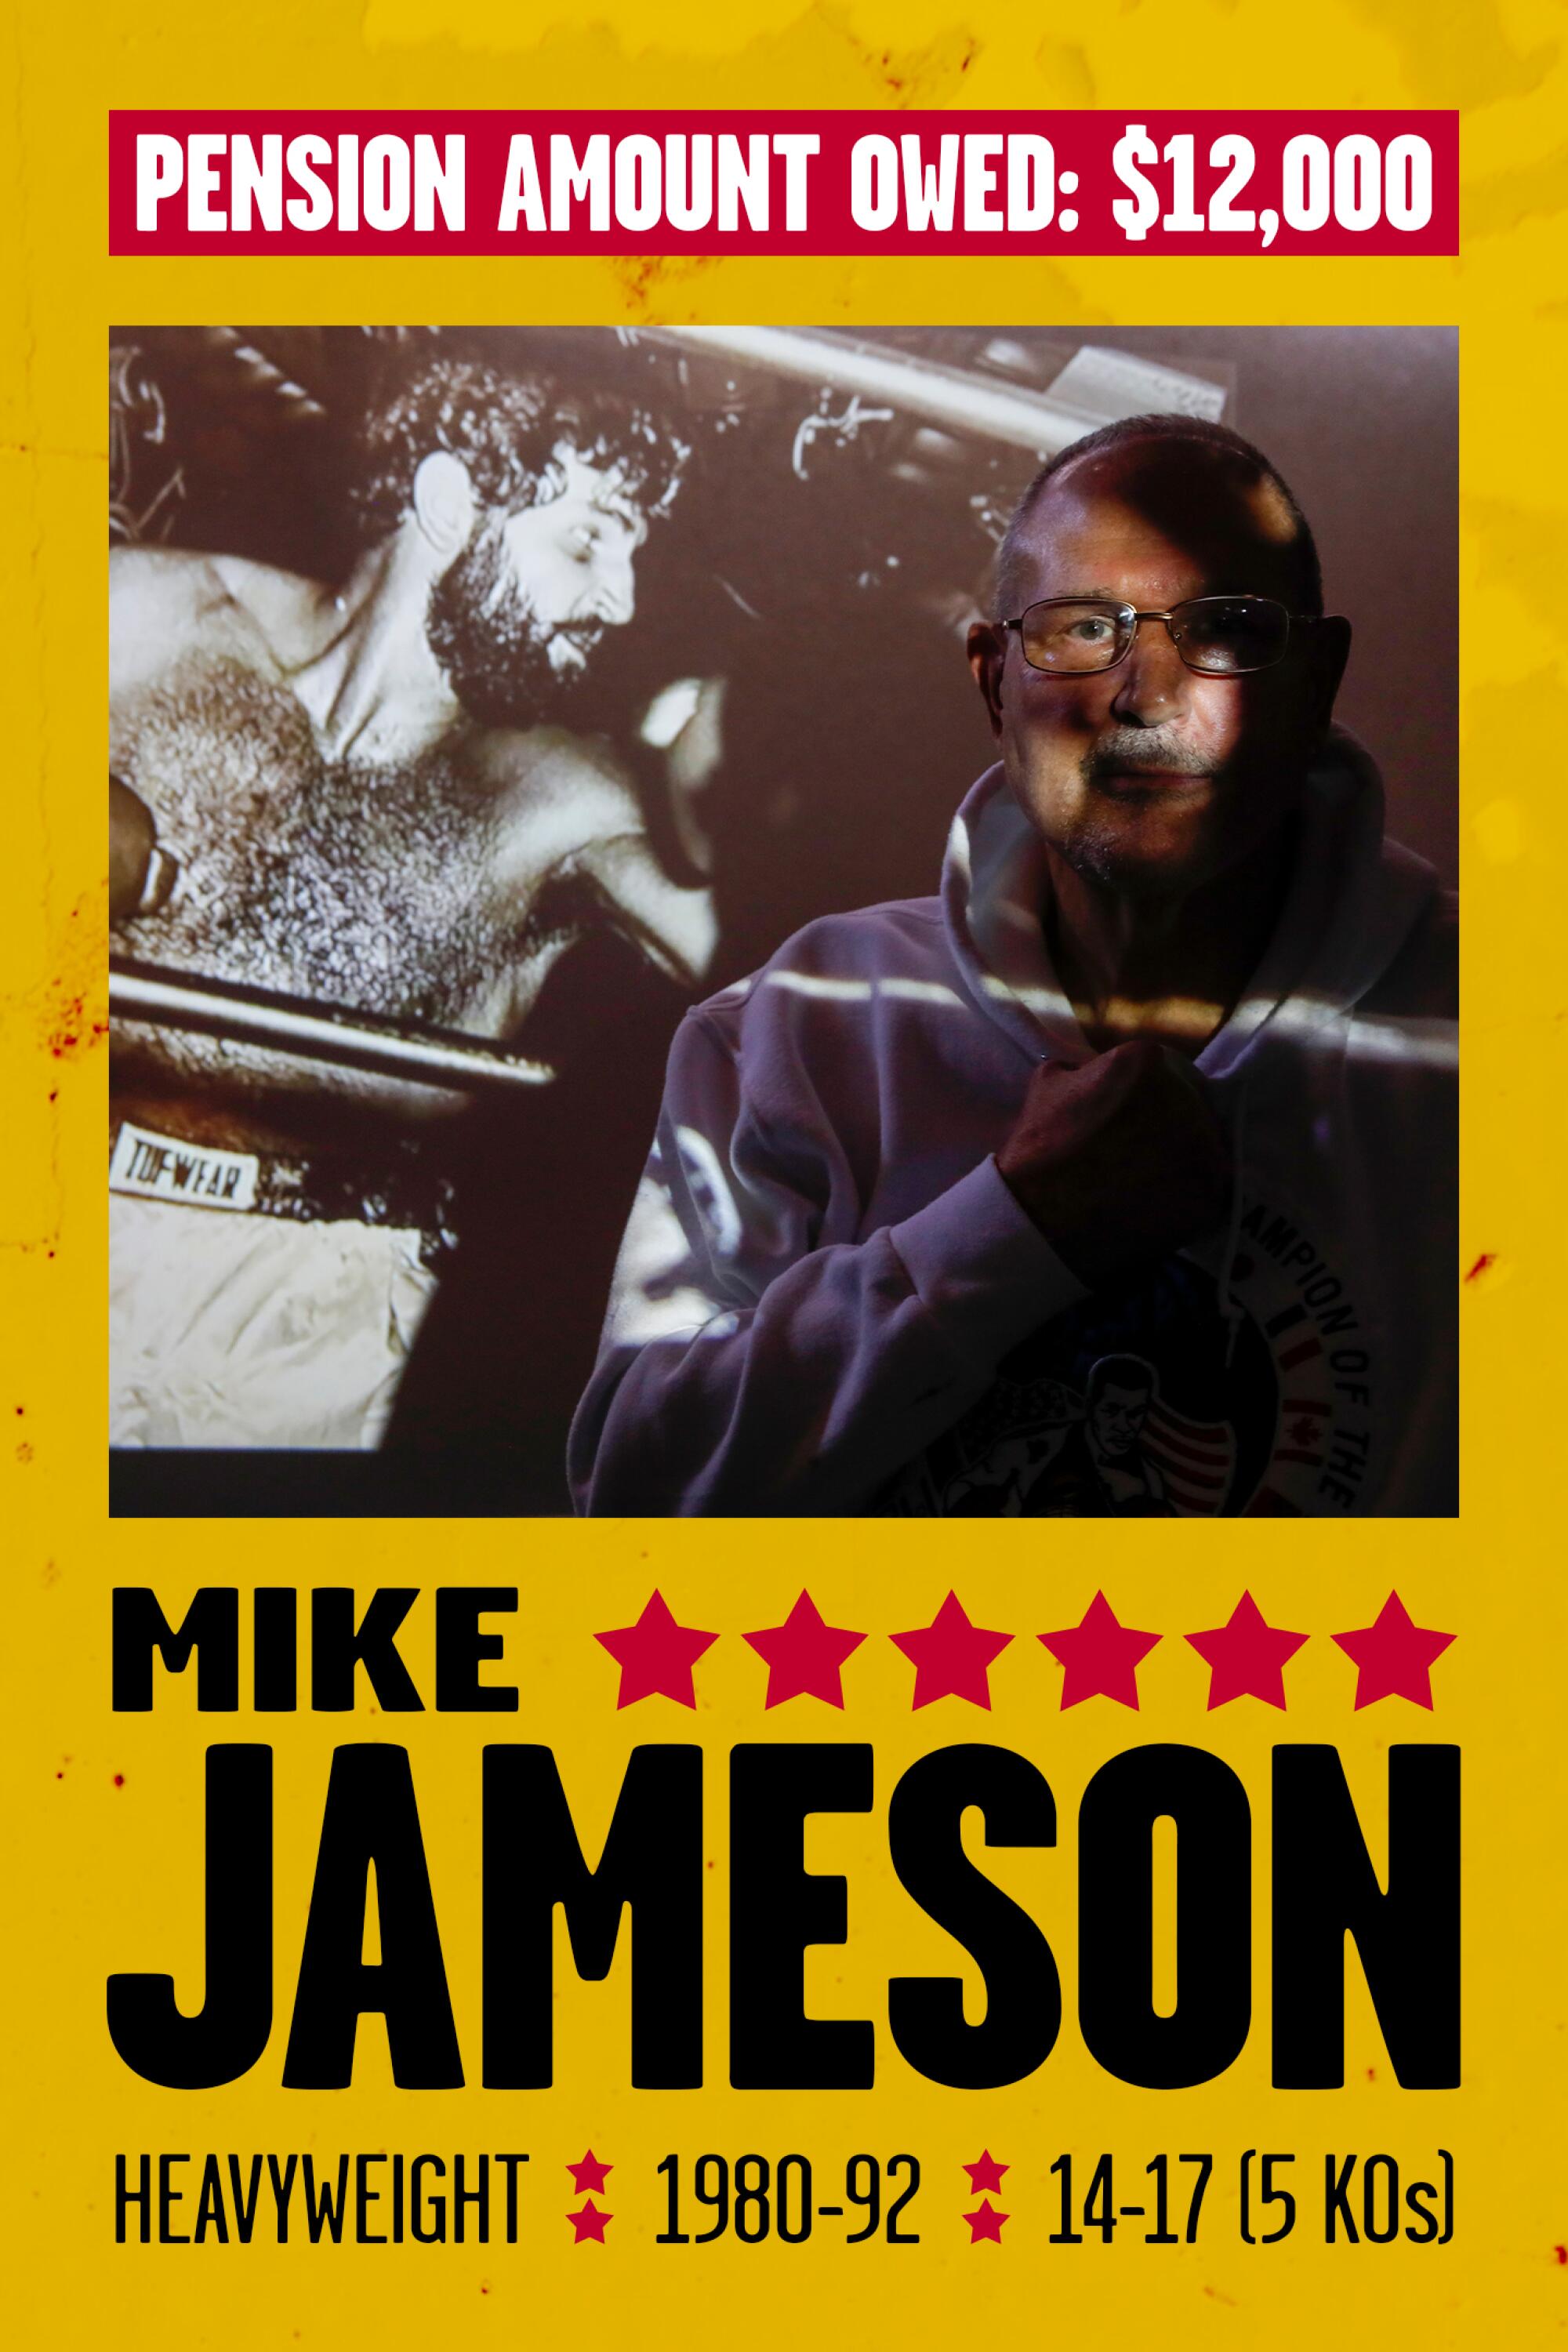 Fight poster: IRISH MIKE JAMESON, HEAVYWEIGHT, 1980-92, 14-17 (5 KOs), PENSION OWED: $12,000